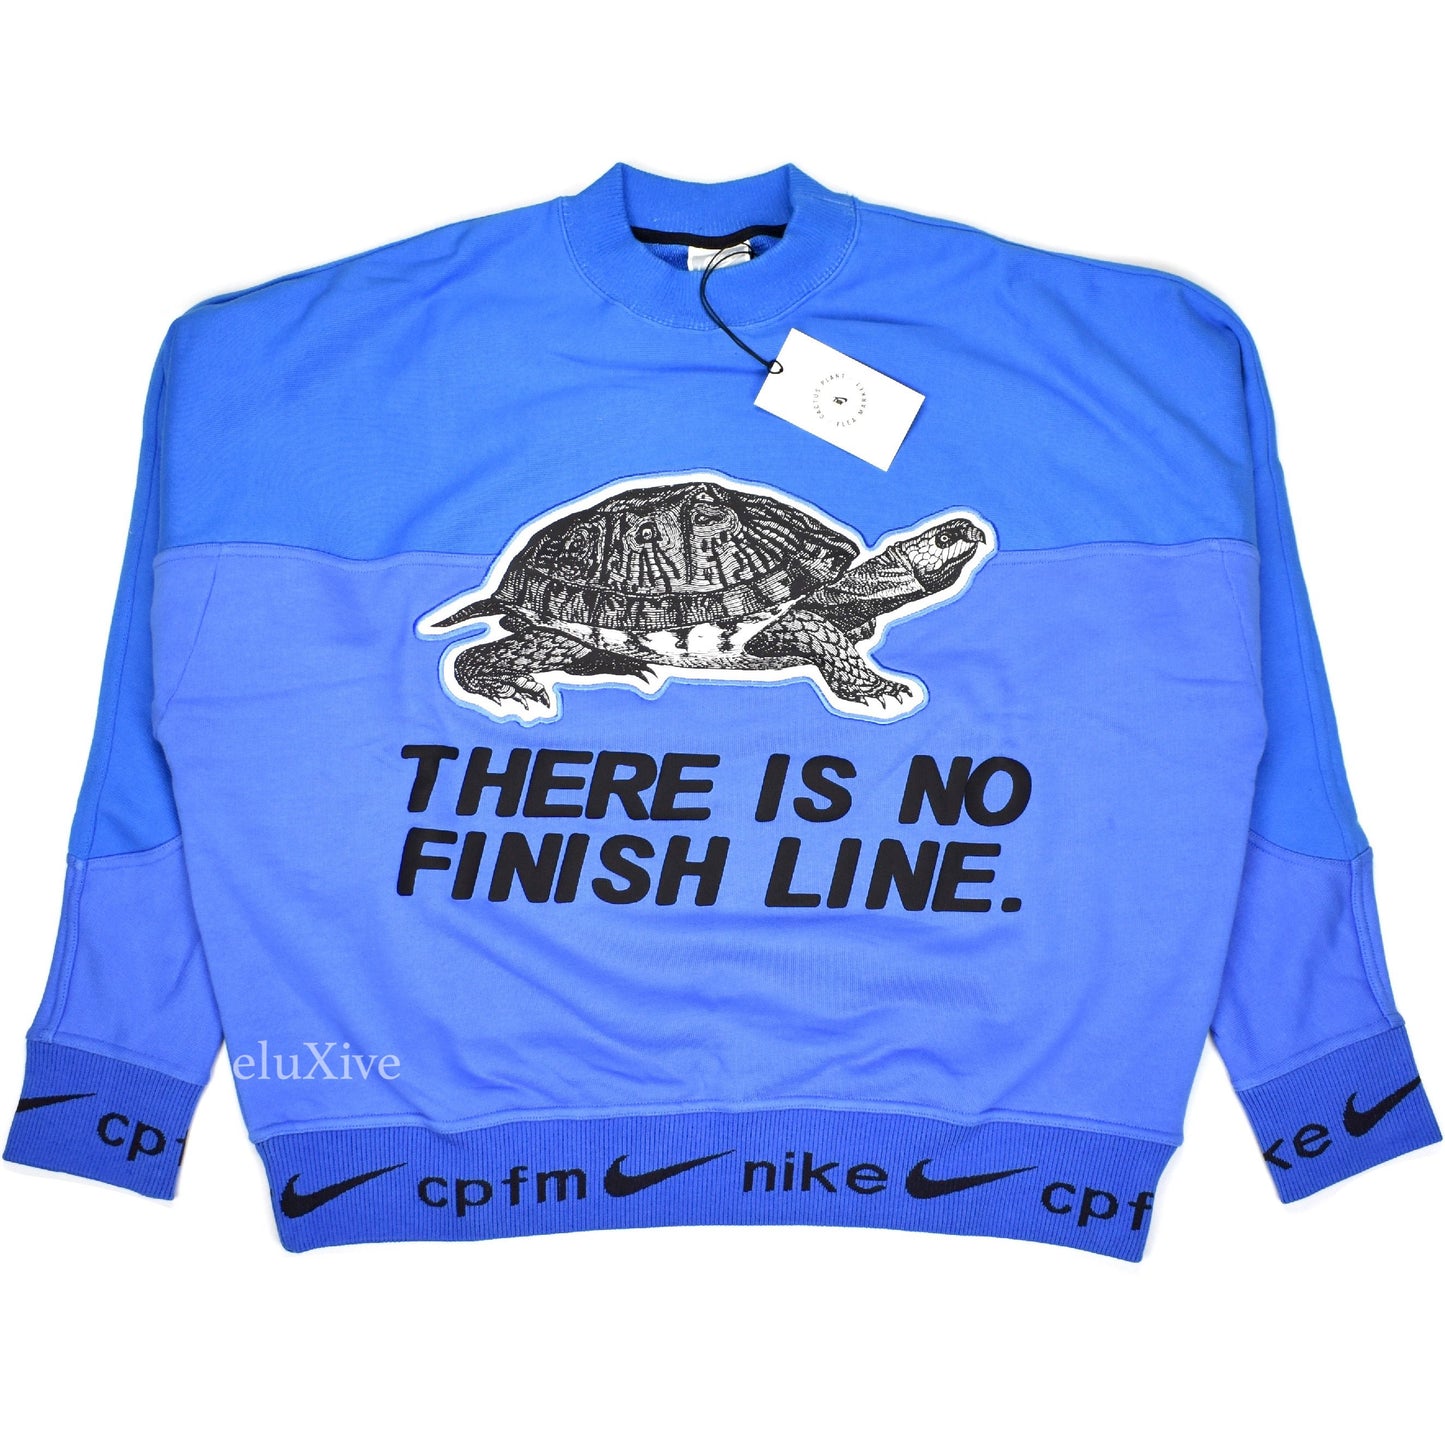 Nike x Cactus Plant Flea Market - Tortoise & Hare Sweatshirt (Blue)